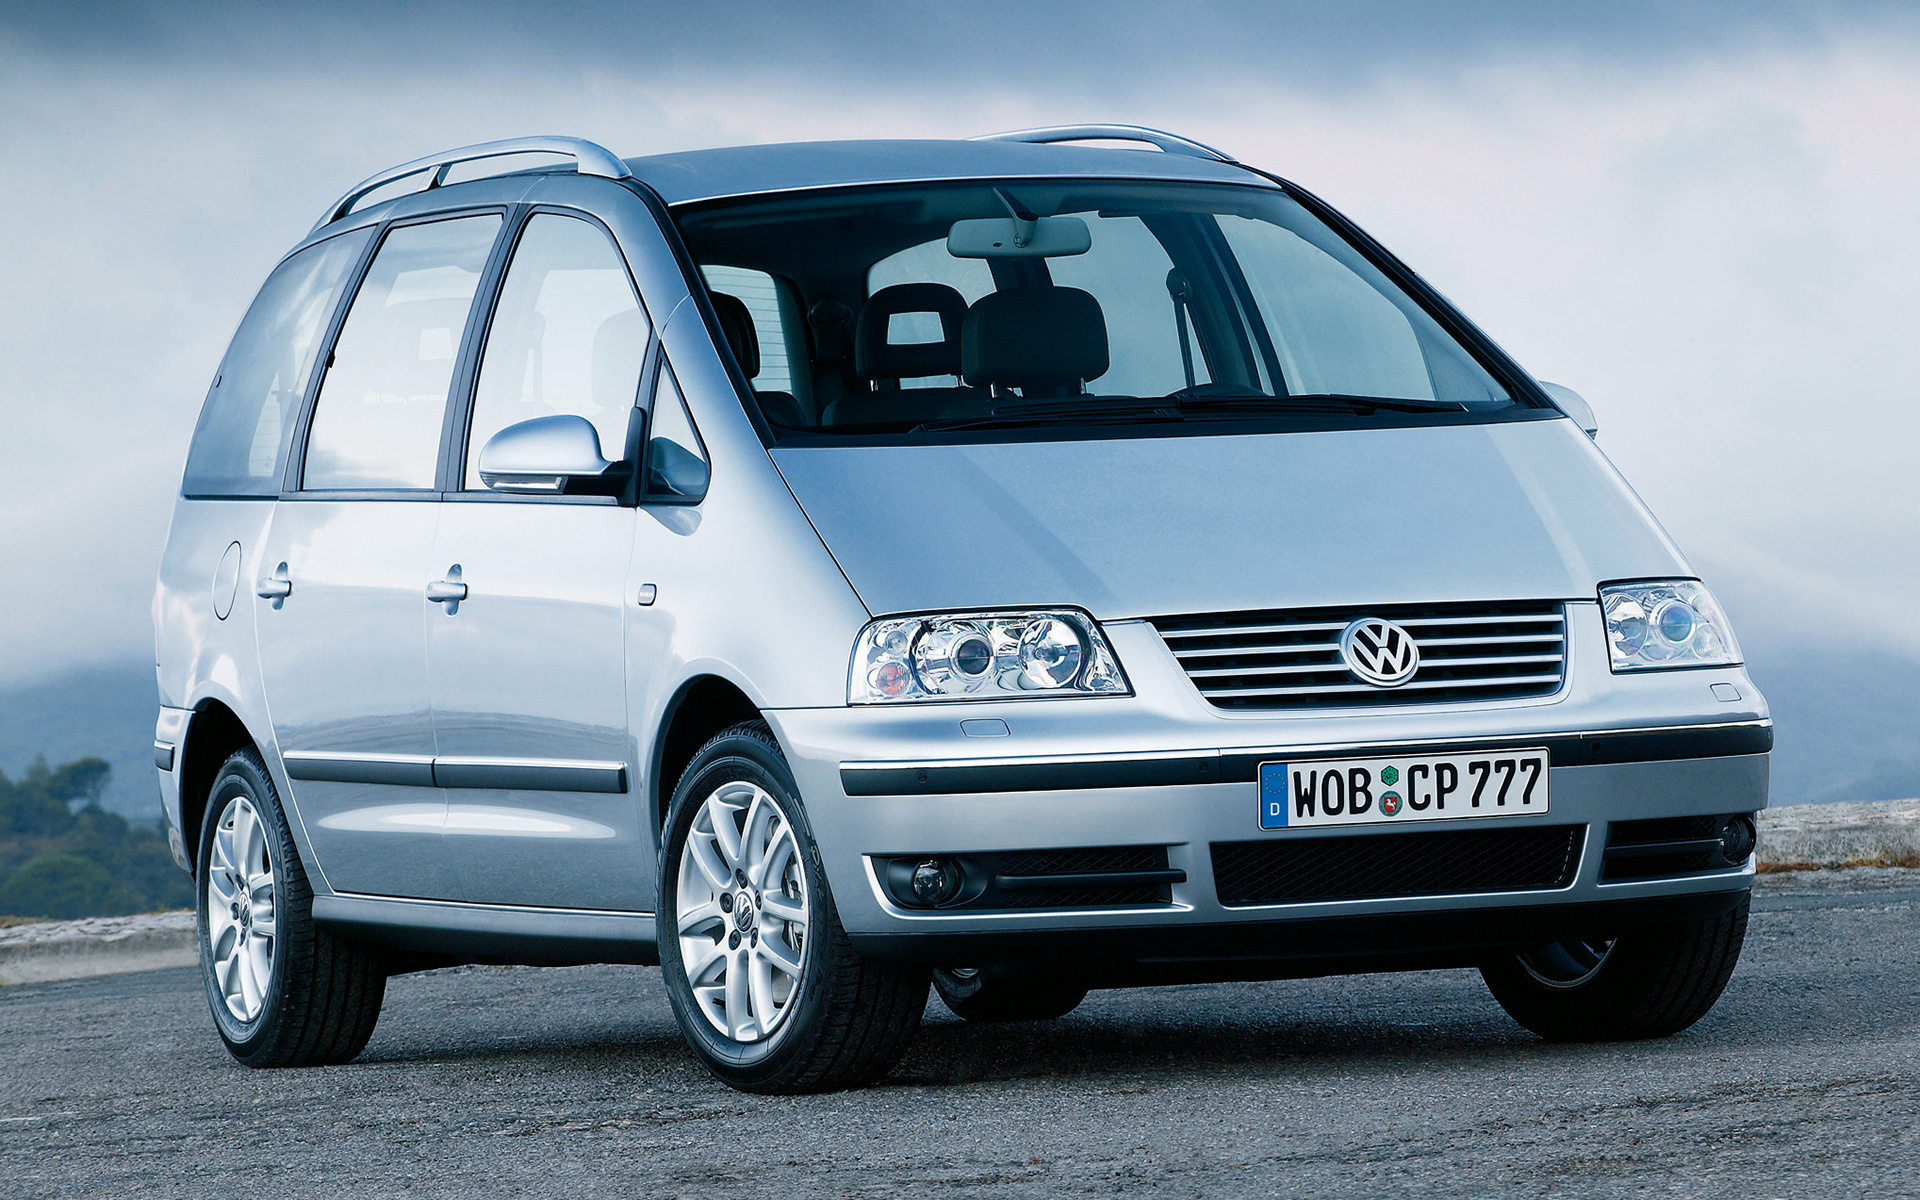 Фольксваген шаран 2001 год. Volkswagen Sharan i. Фольксваген Шаран в 5. Фольксваген Шаран 2 поколение. Фольксваген Шаран 1 поколение.